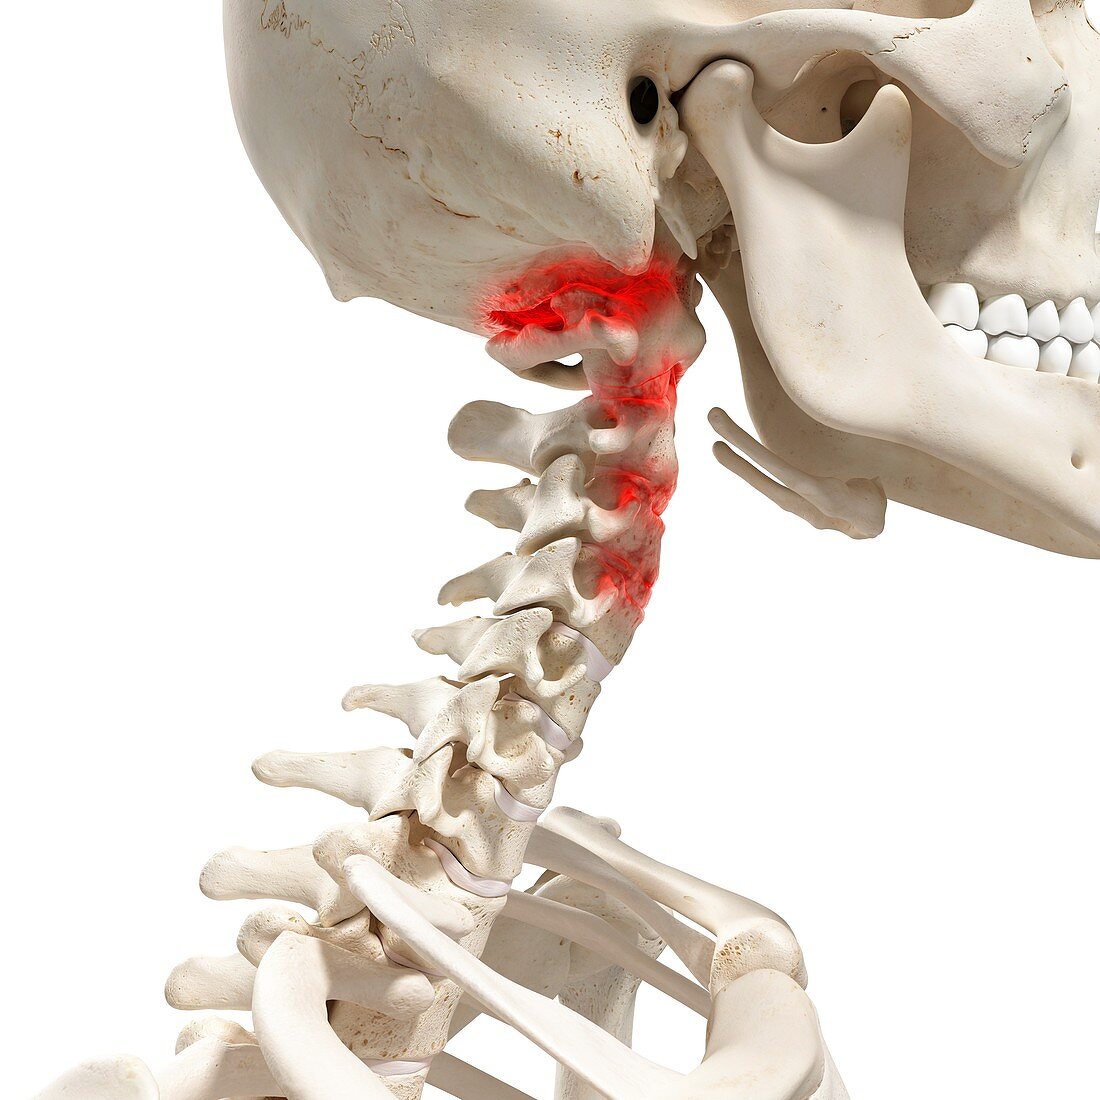 Arthritis in the cervical spine, illustration